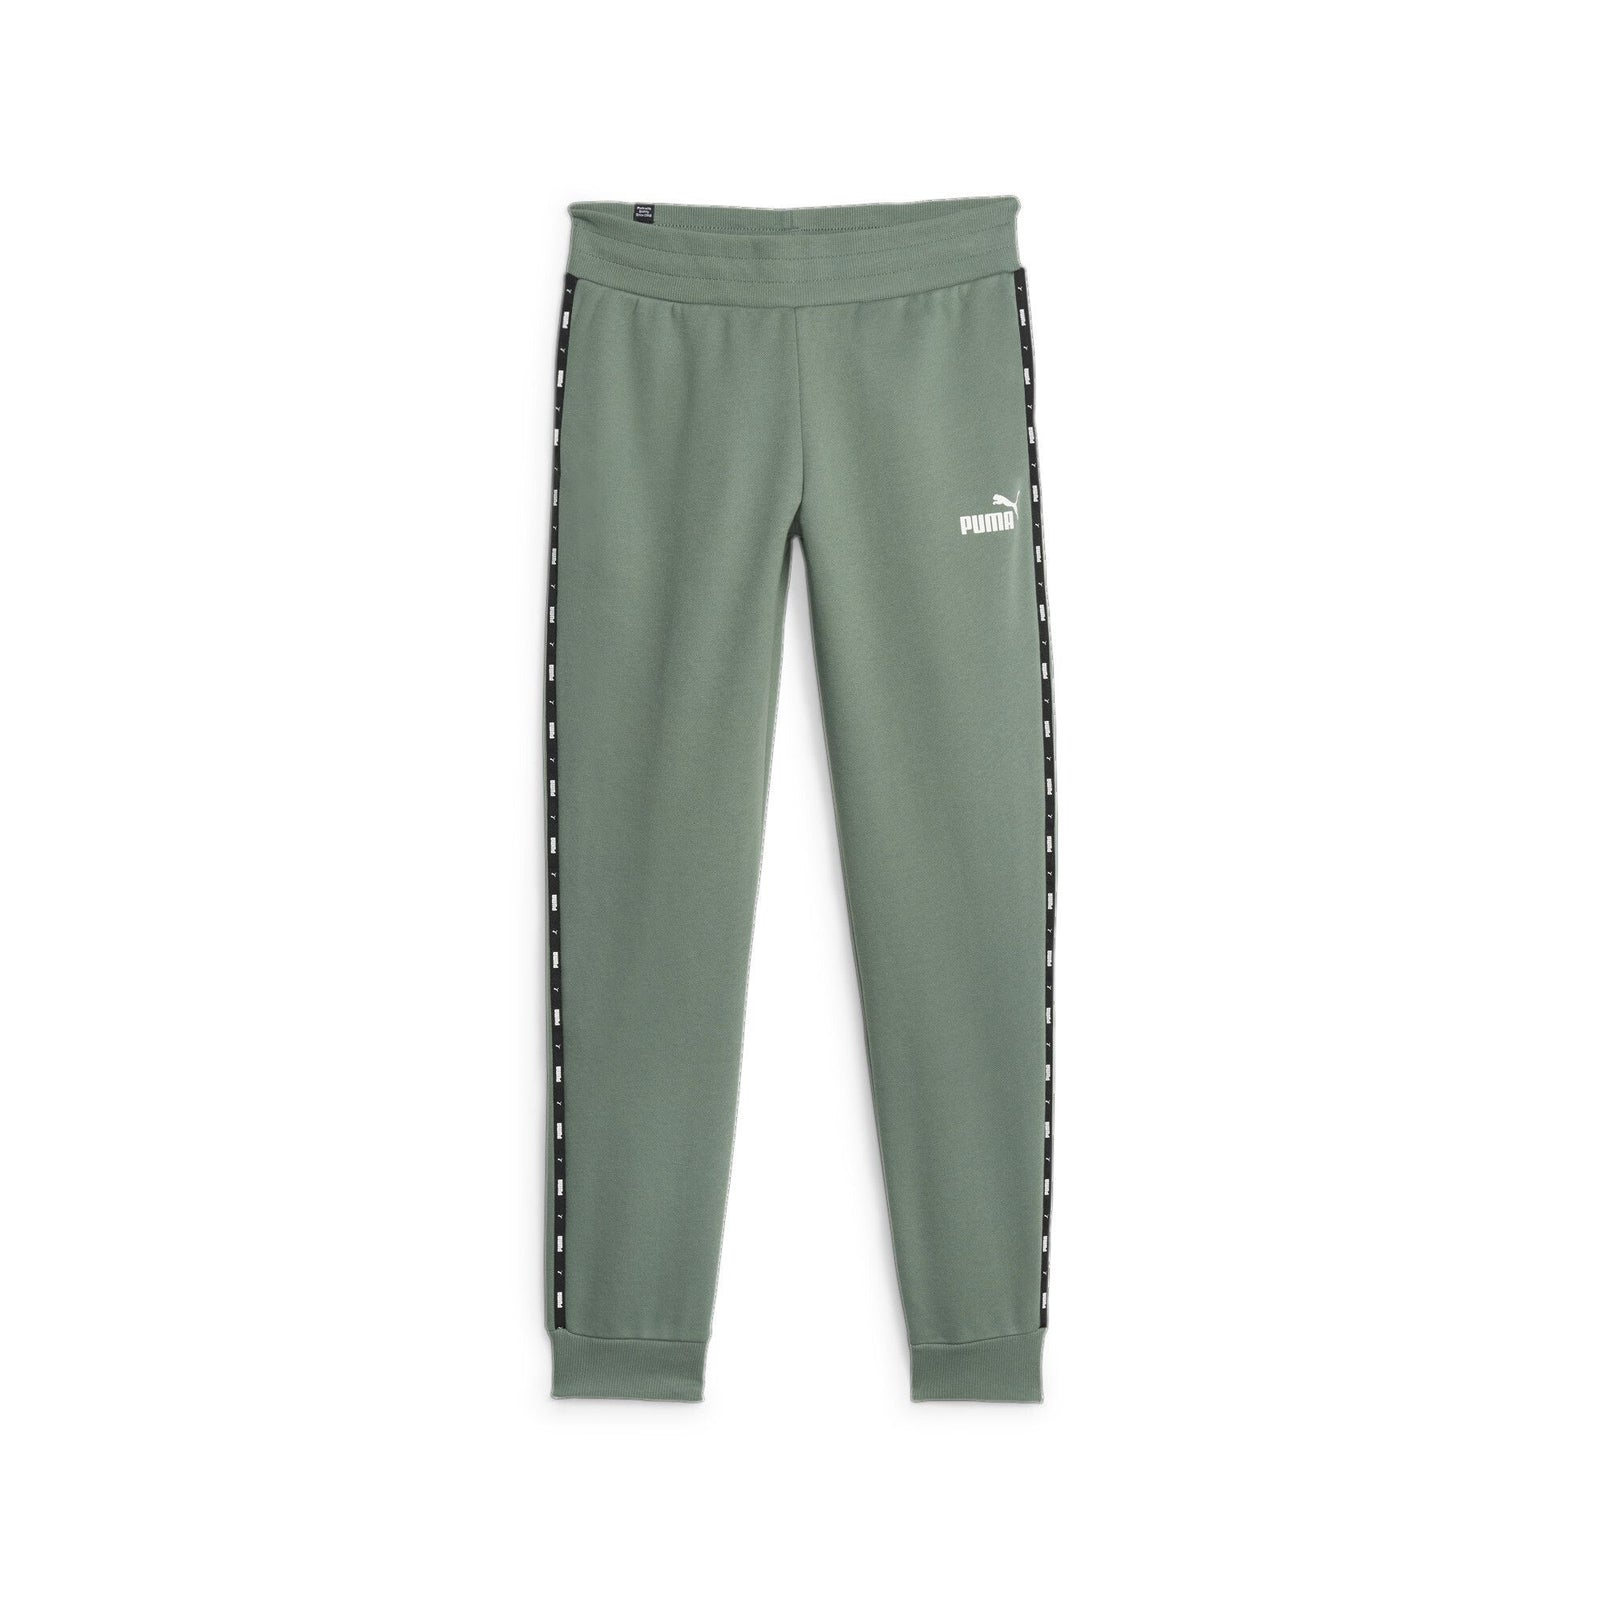 Puma, green boys pants, kids sportswear